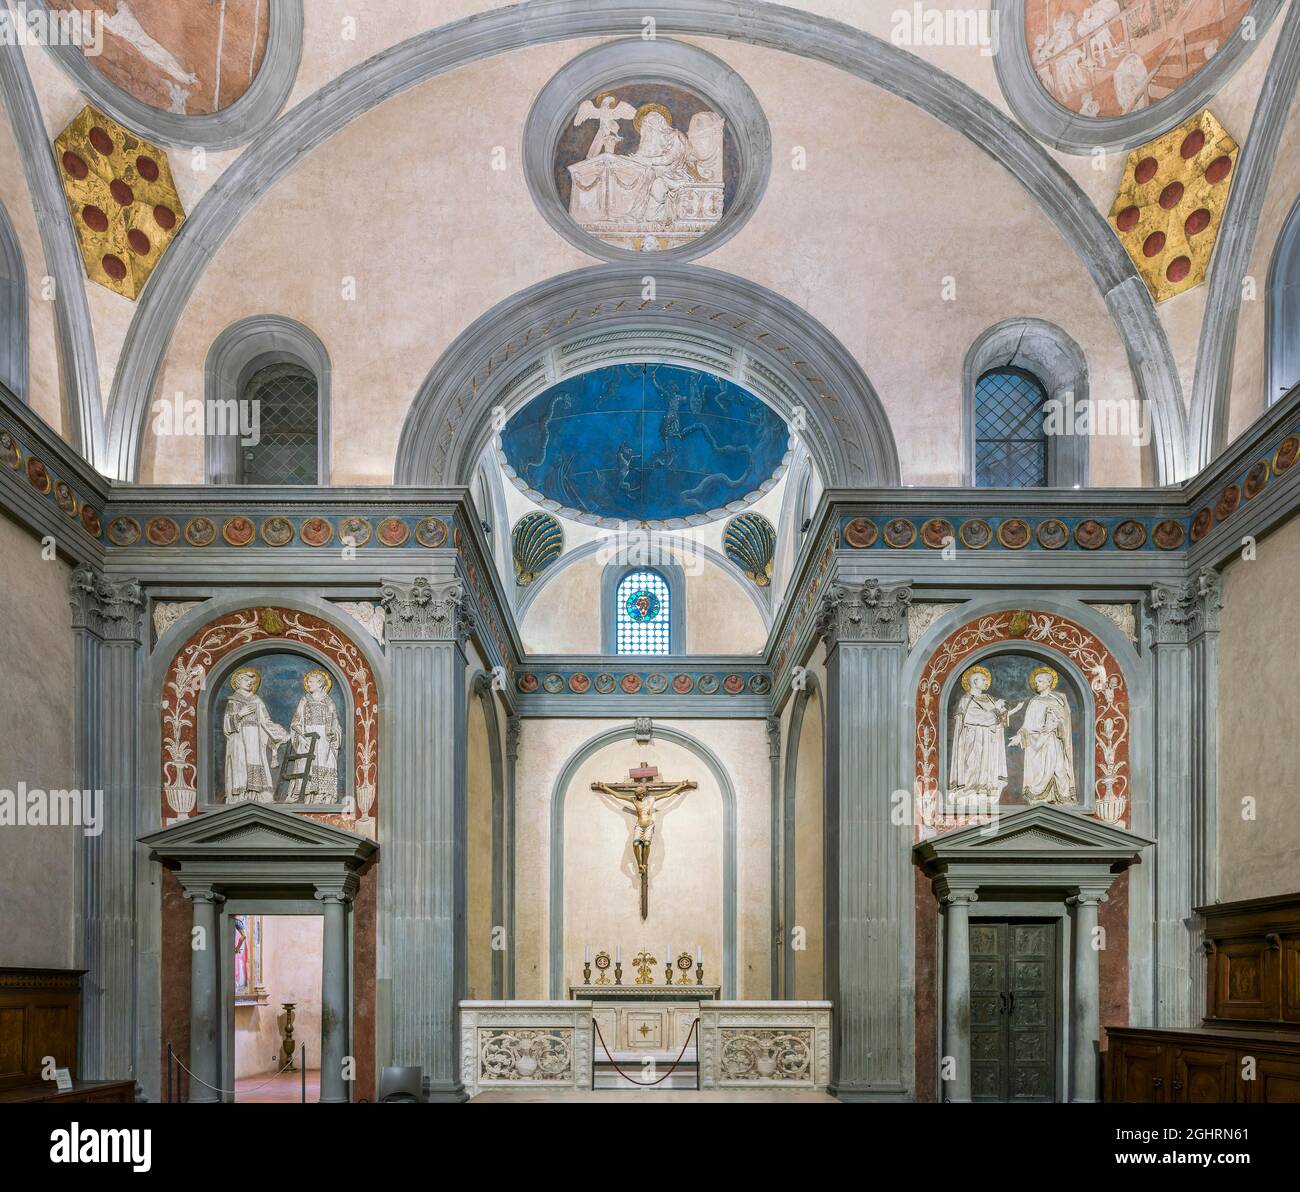 Central room with apse and altar, Sagrestia Vecchia, Old Sacristy, architect Filippo Brunelleschi, Renaissance, Basilica di San Lorenzo, Florence Stock Photo